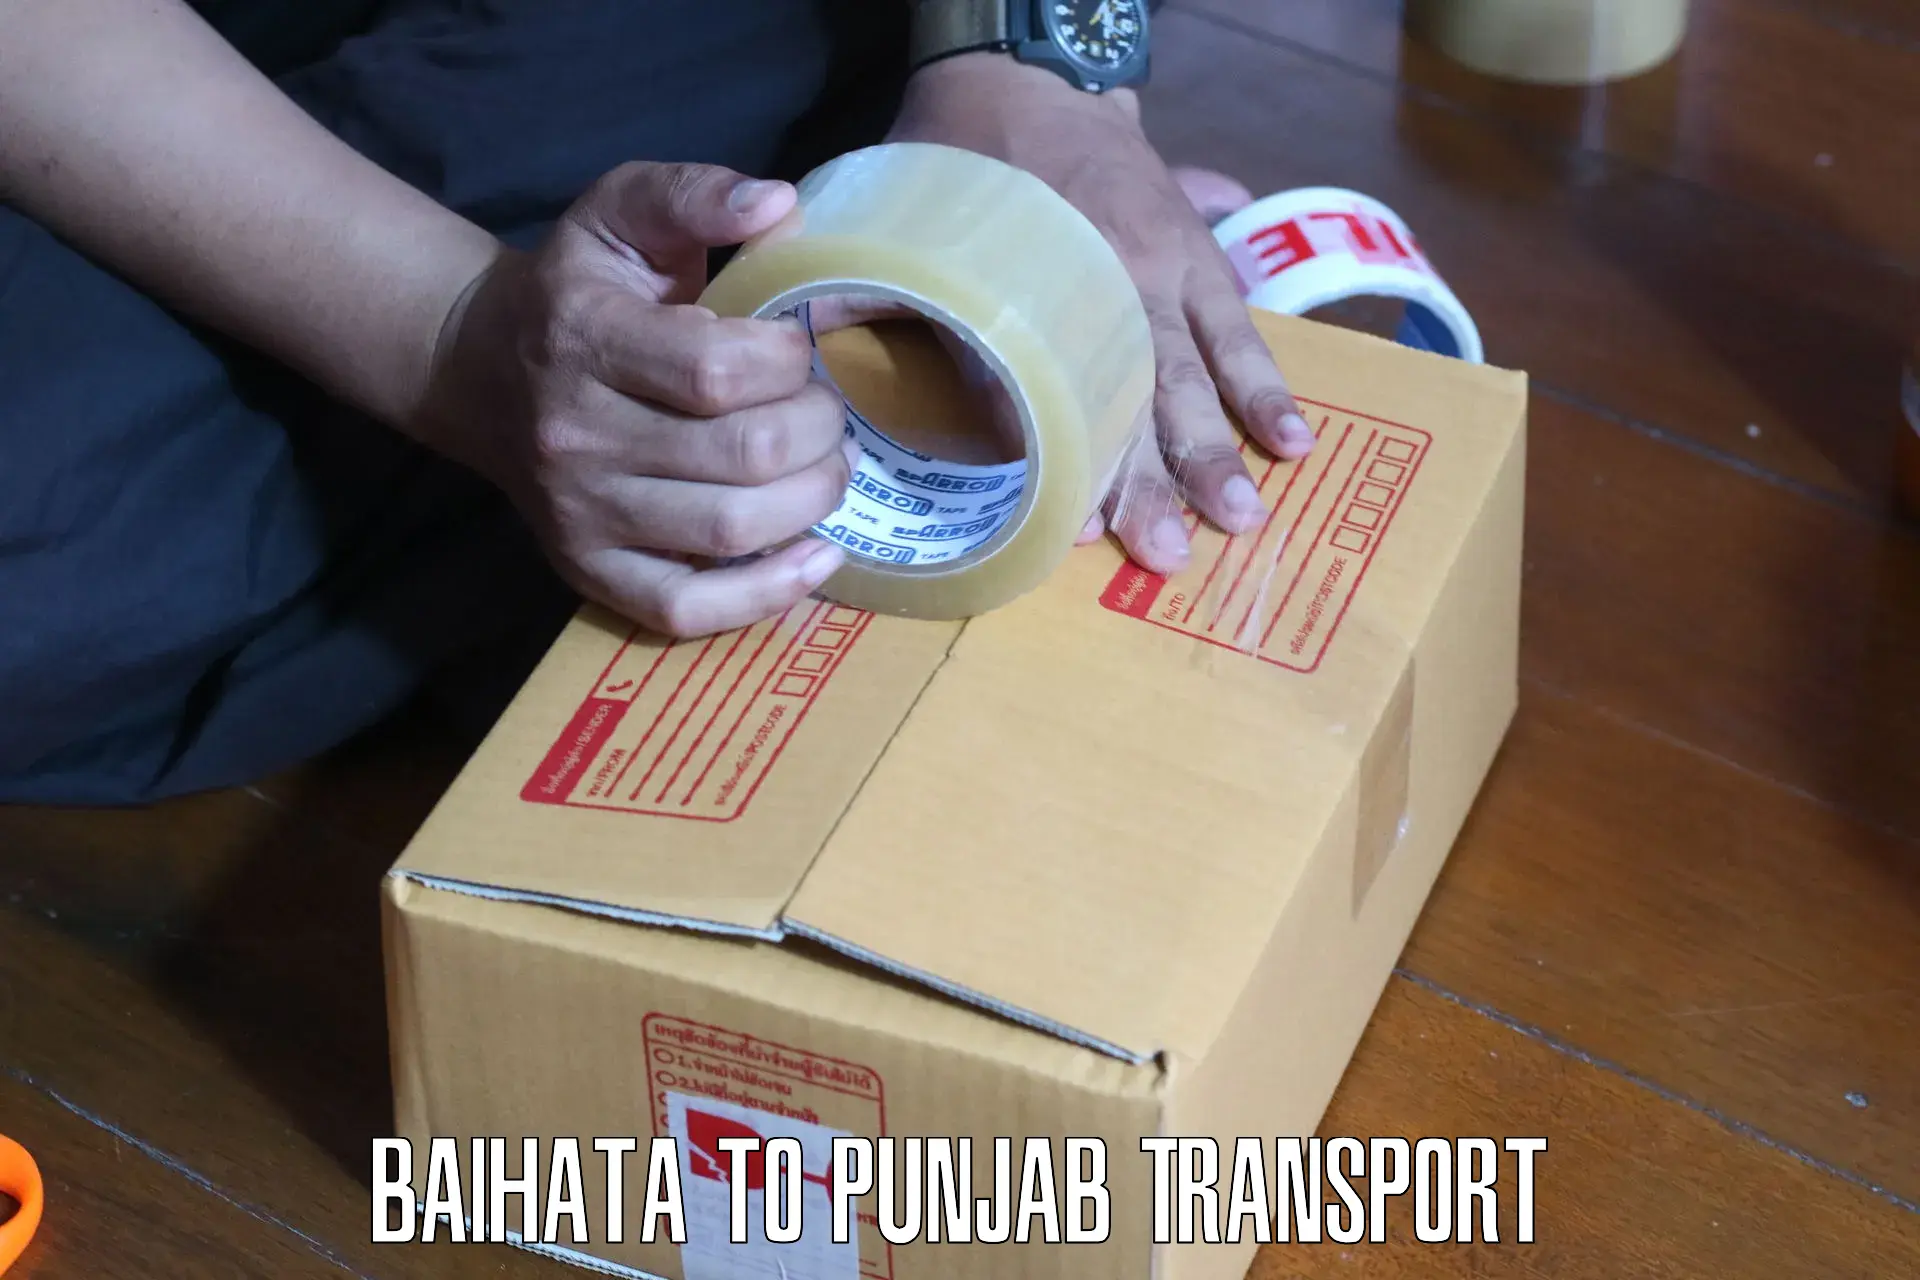 Sending bike to another city Baihata to Punjab